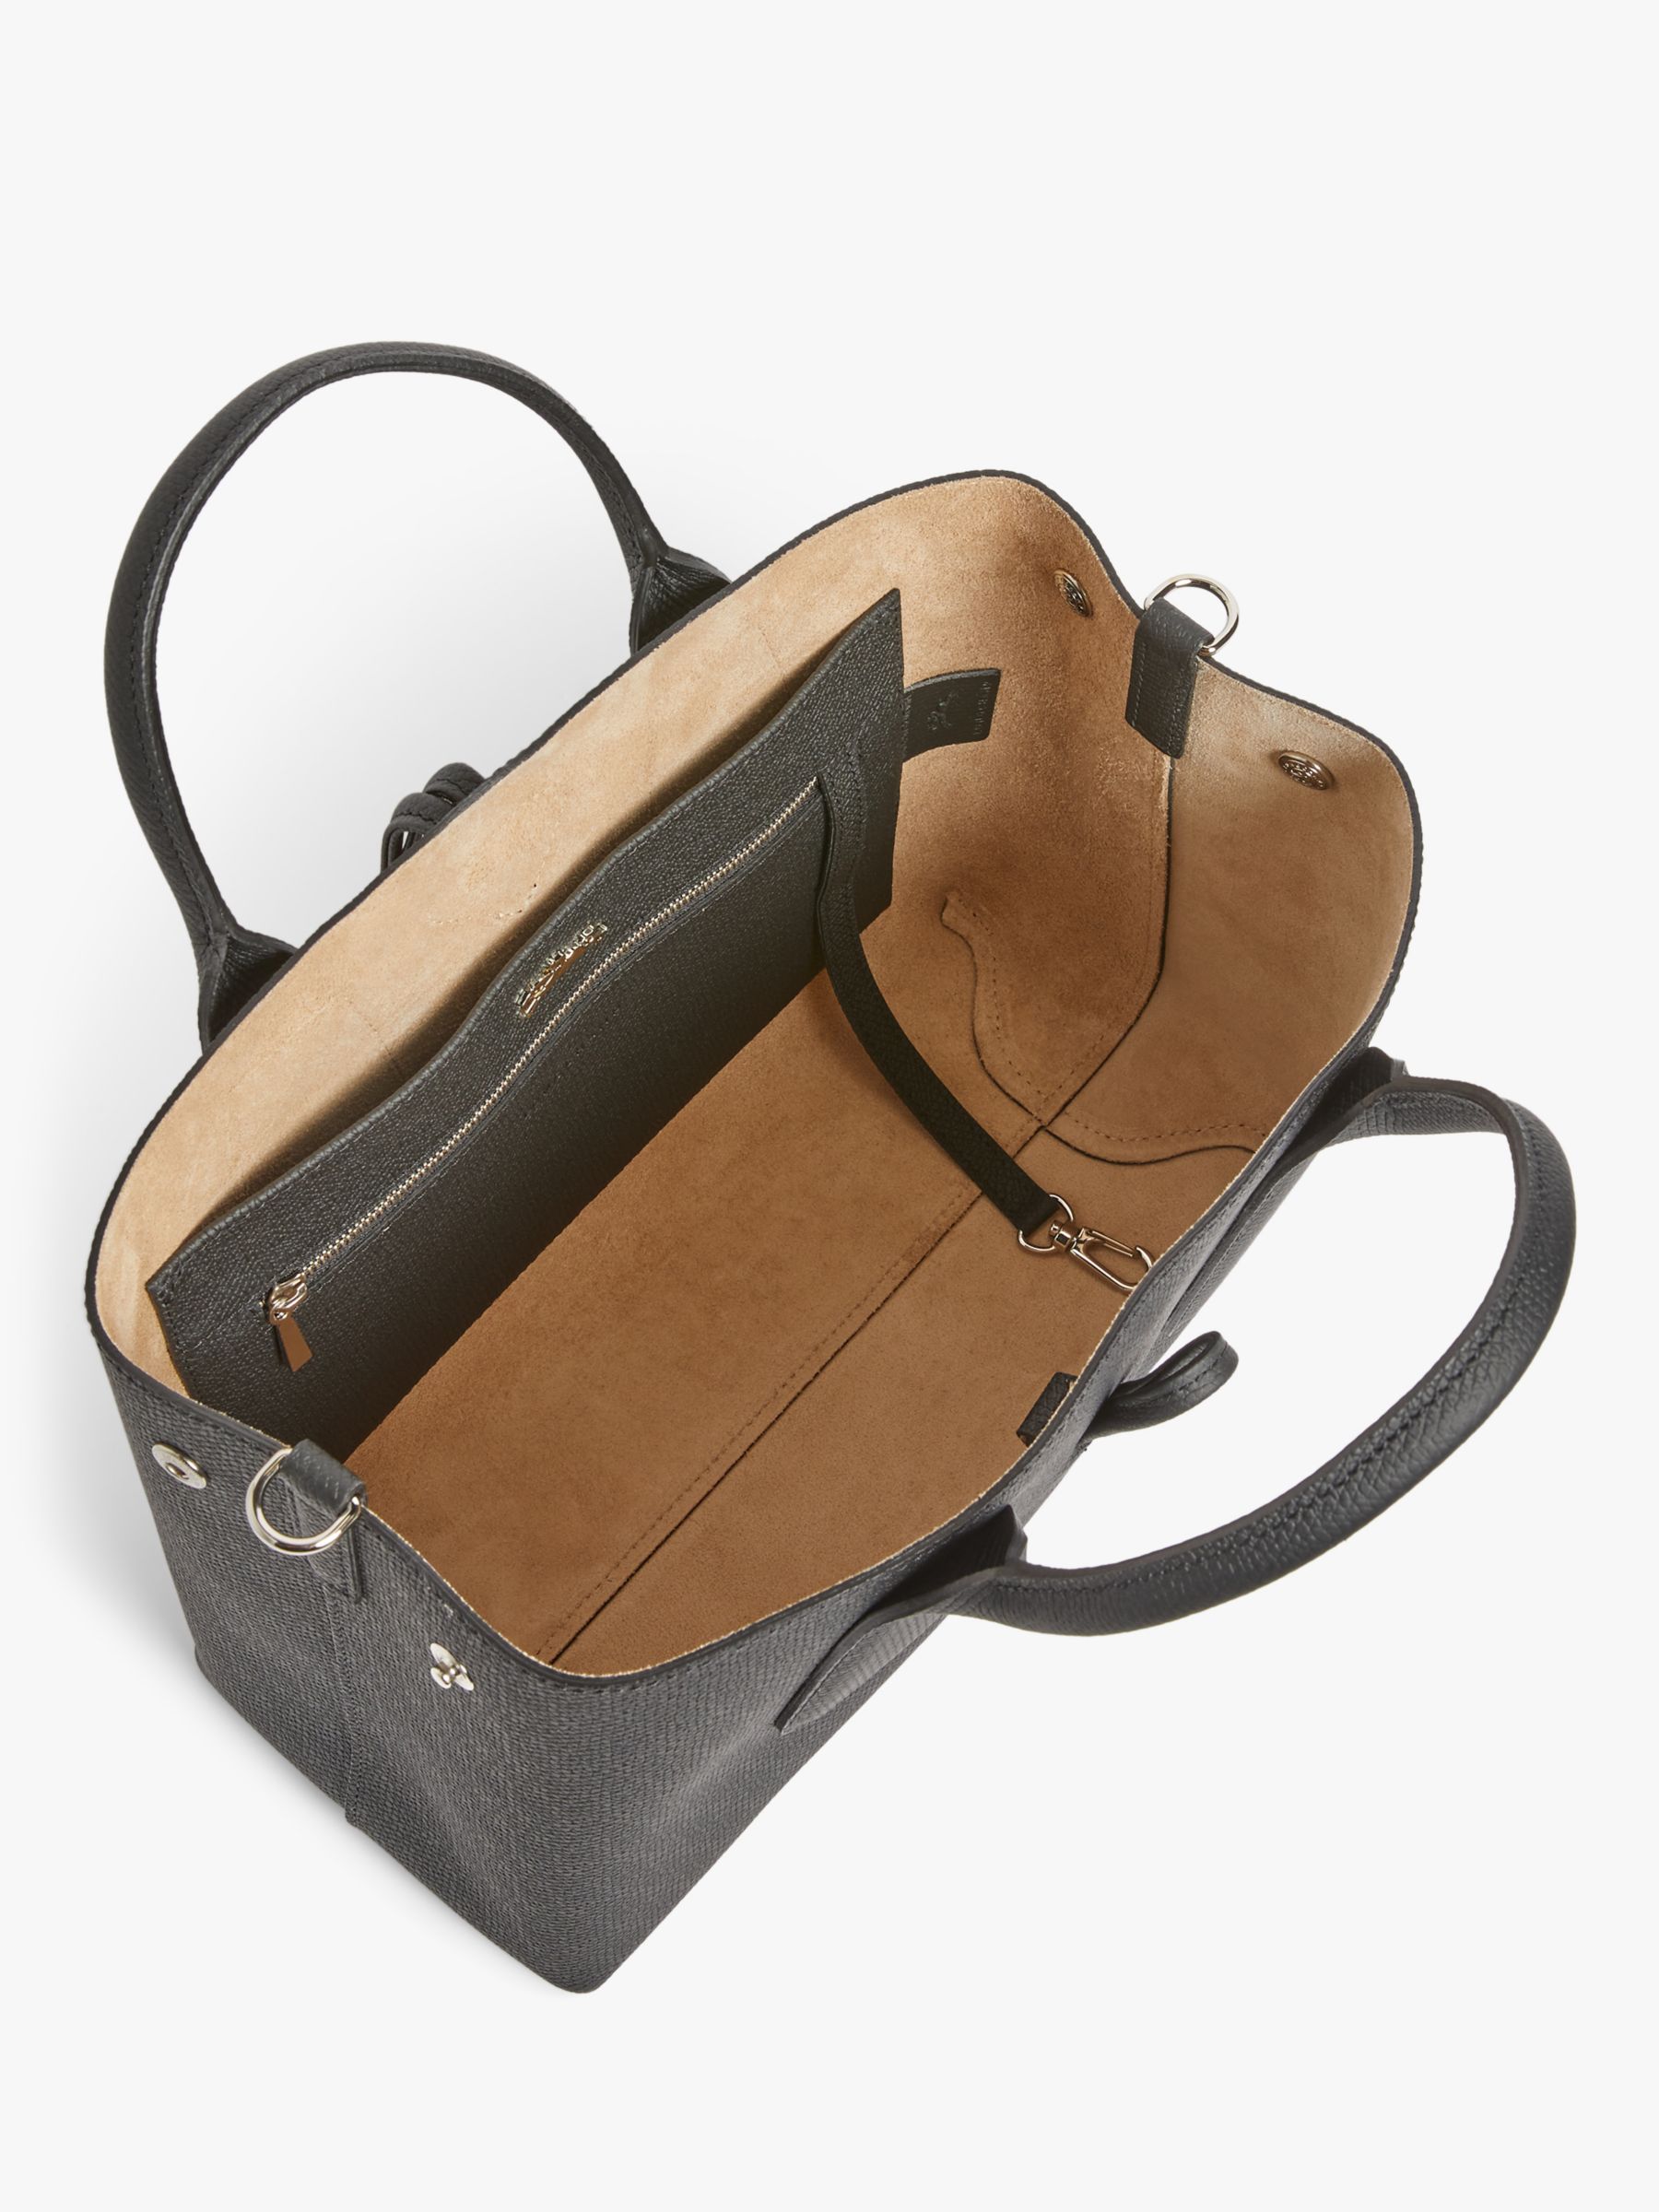 Longchamp Roseau Leather Shoulder Bag, Black at John Lewis & Partners